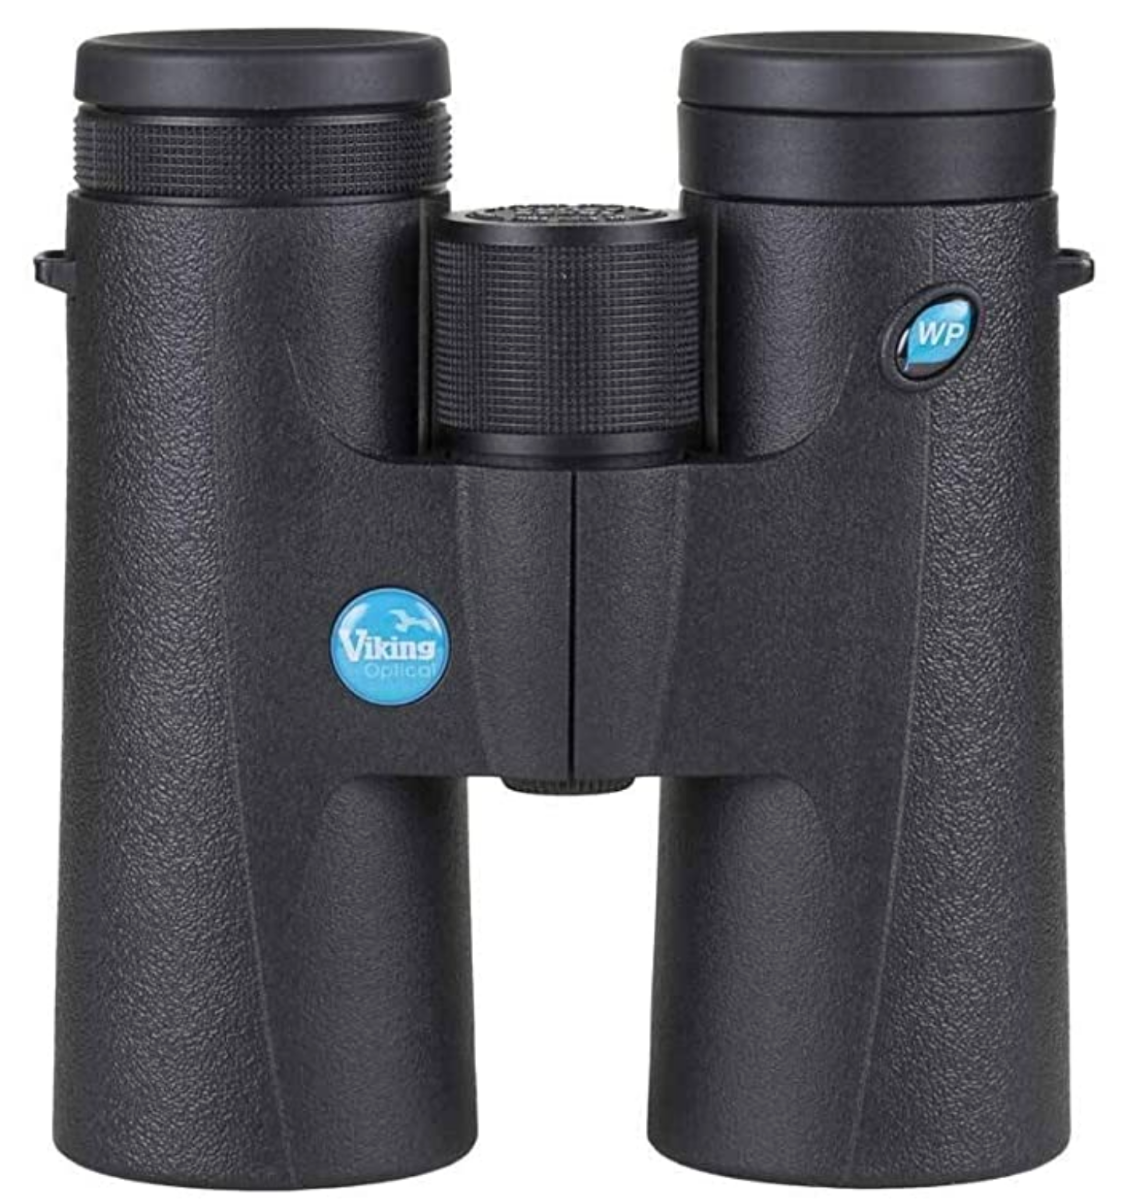 Product Image of Viking Badger 8x32 Binoculars